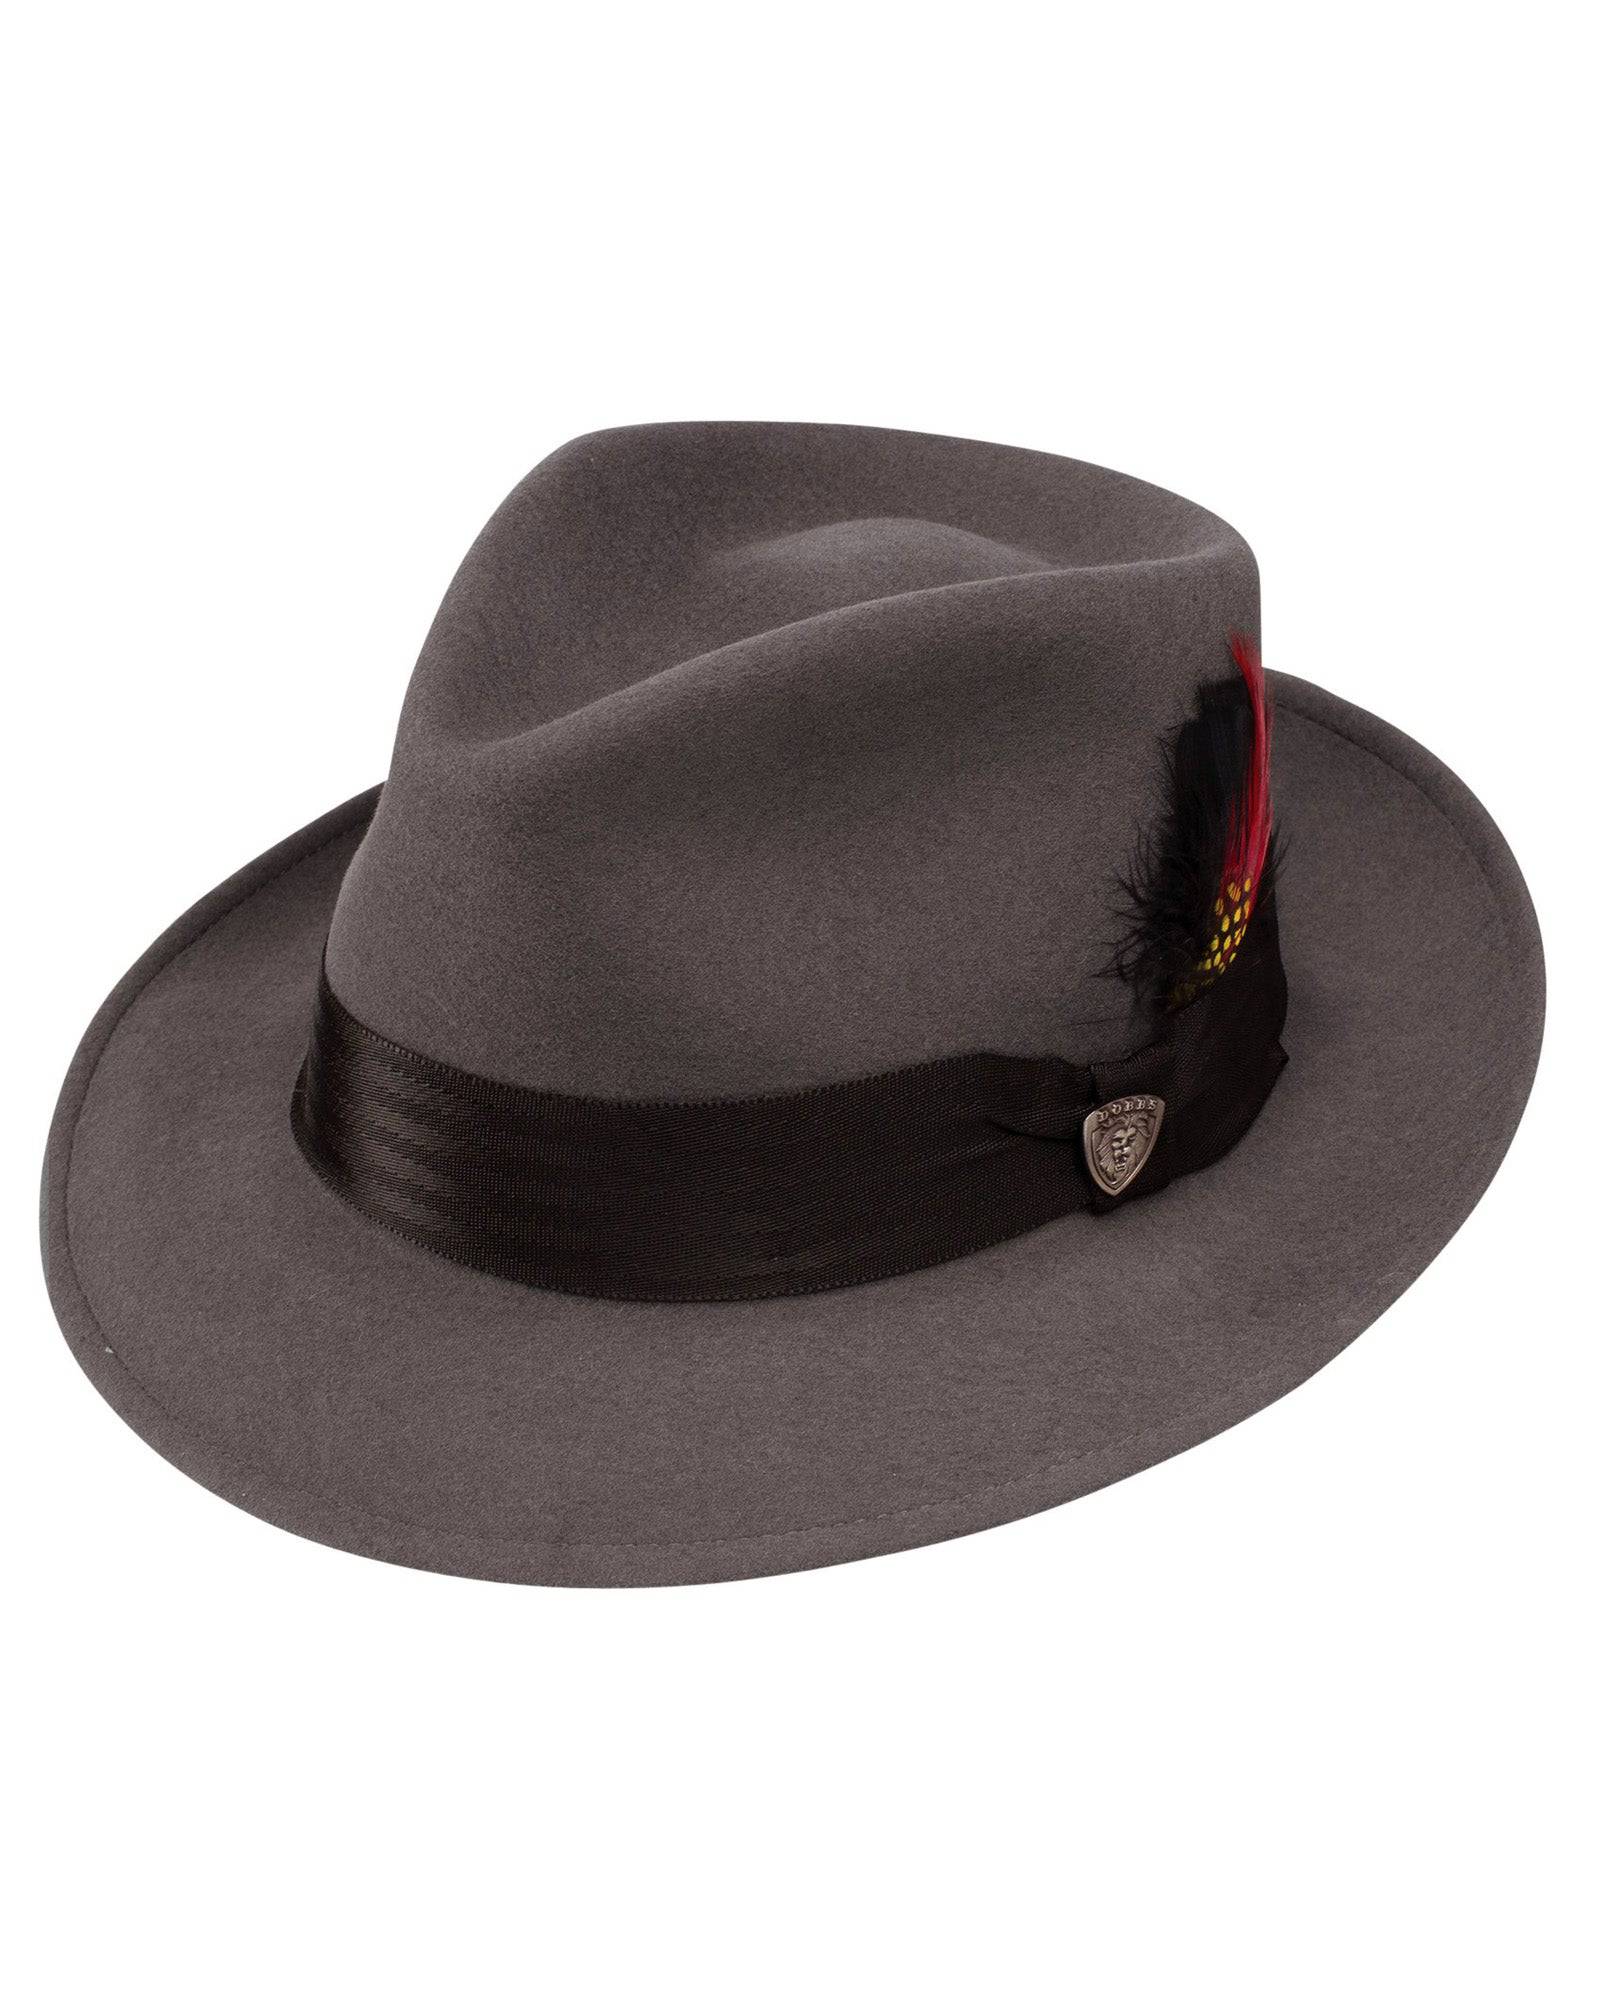 Dobbs Glen Cove Fedora Hat in Steel - Rainwater's Men's Clothing and Tuxedo Rental